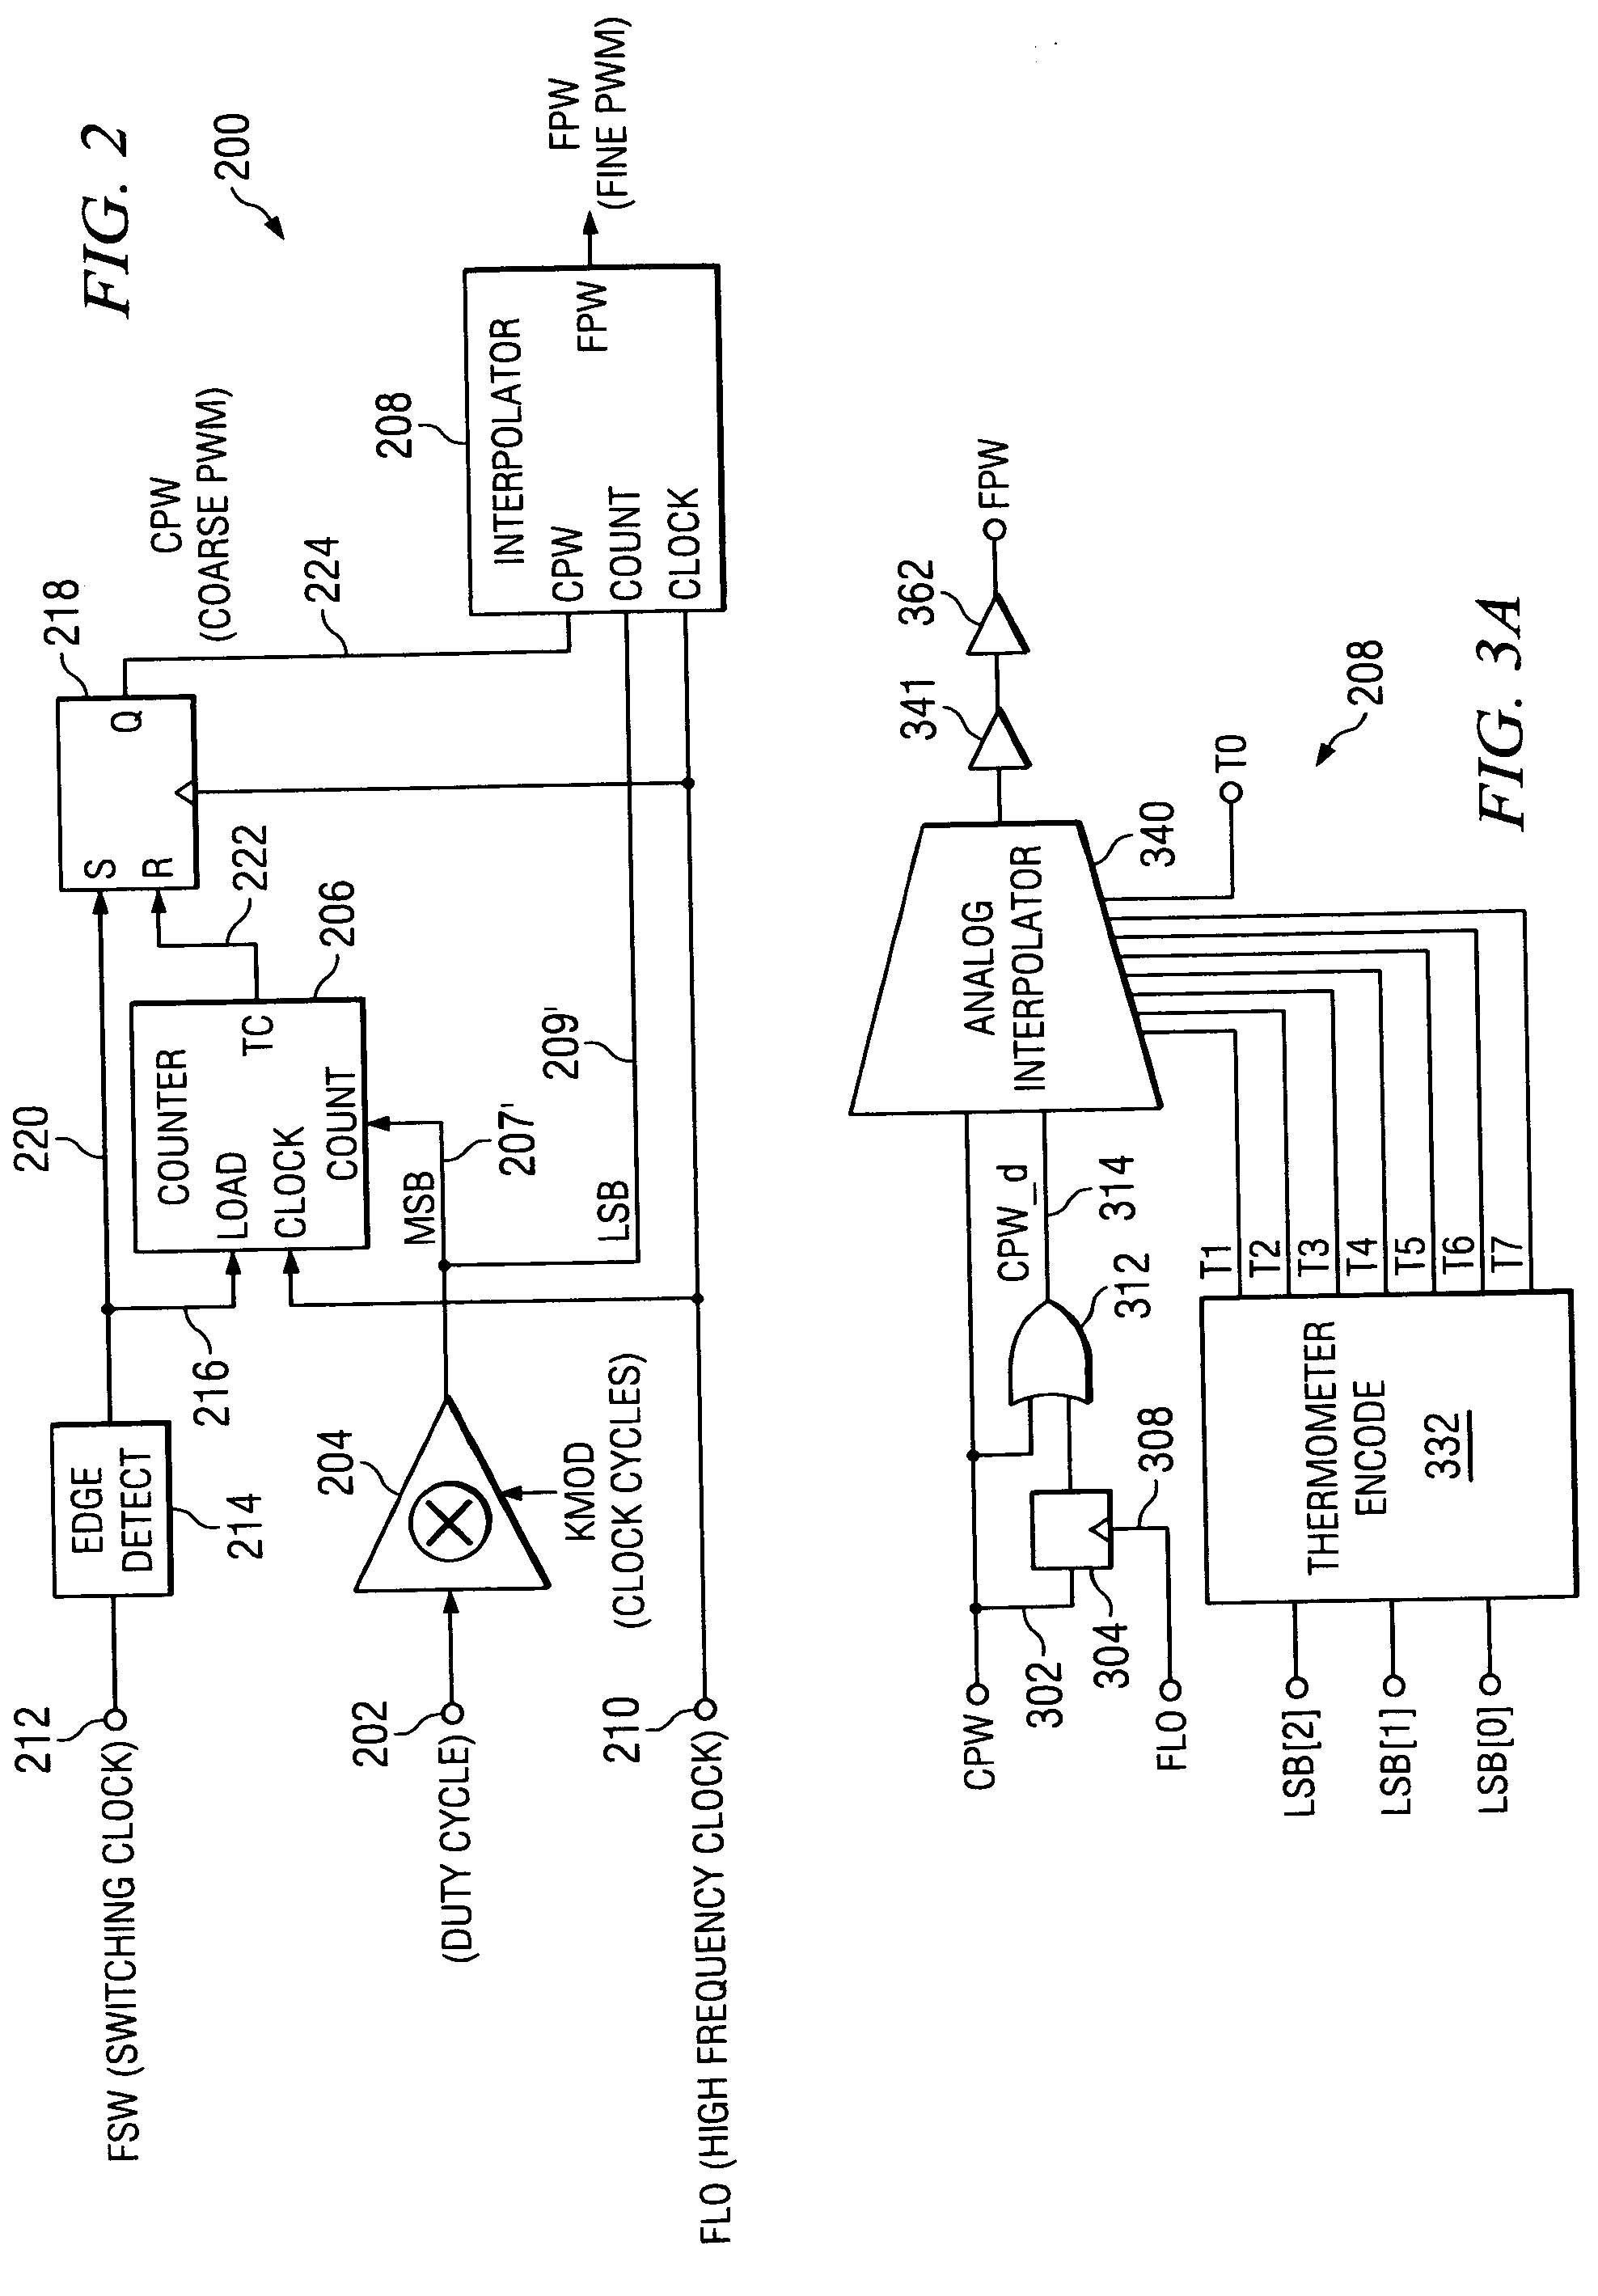 Fine resolution pulse width modulation pulse generator for use in a multiphase pulse width modulated voltage regulator